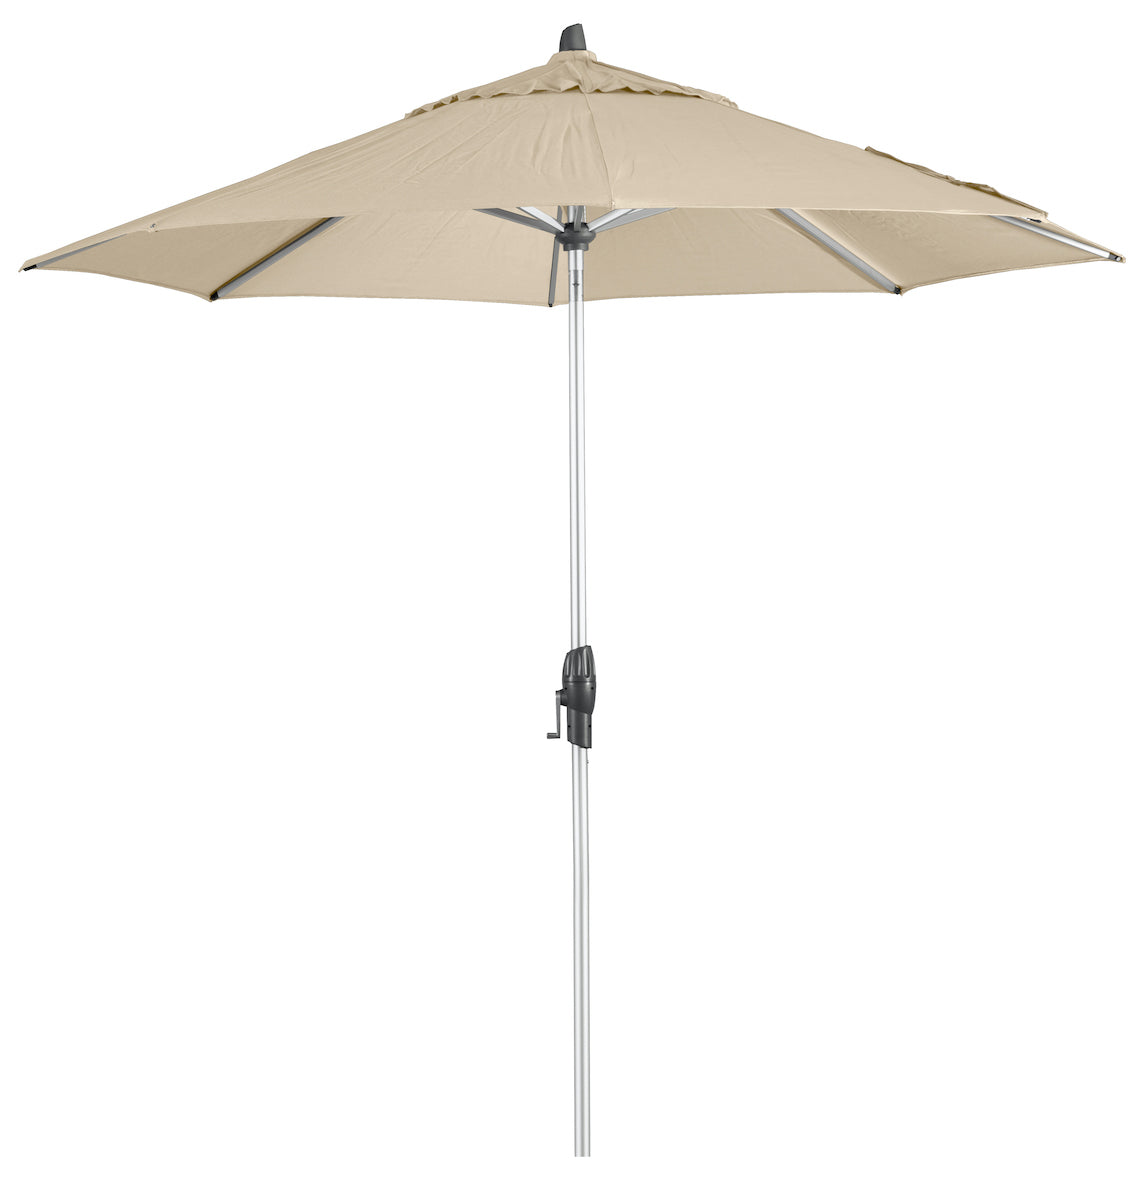 Shelta Fairlight 270 Umbrella